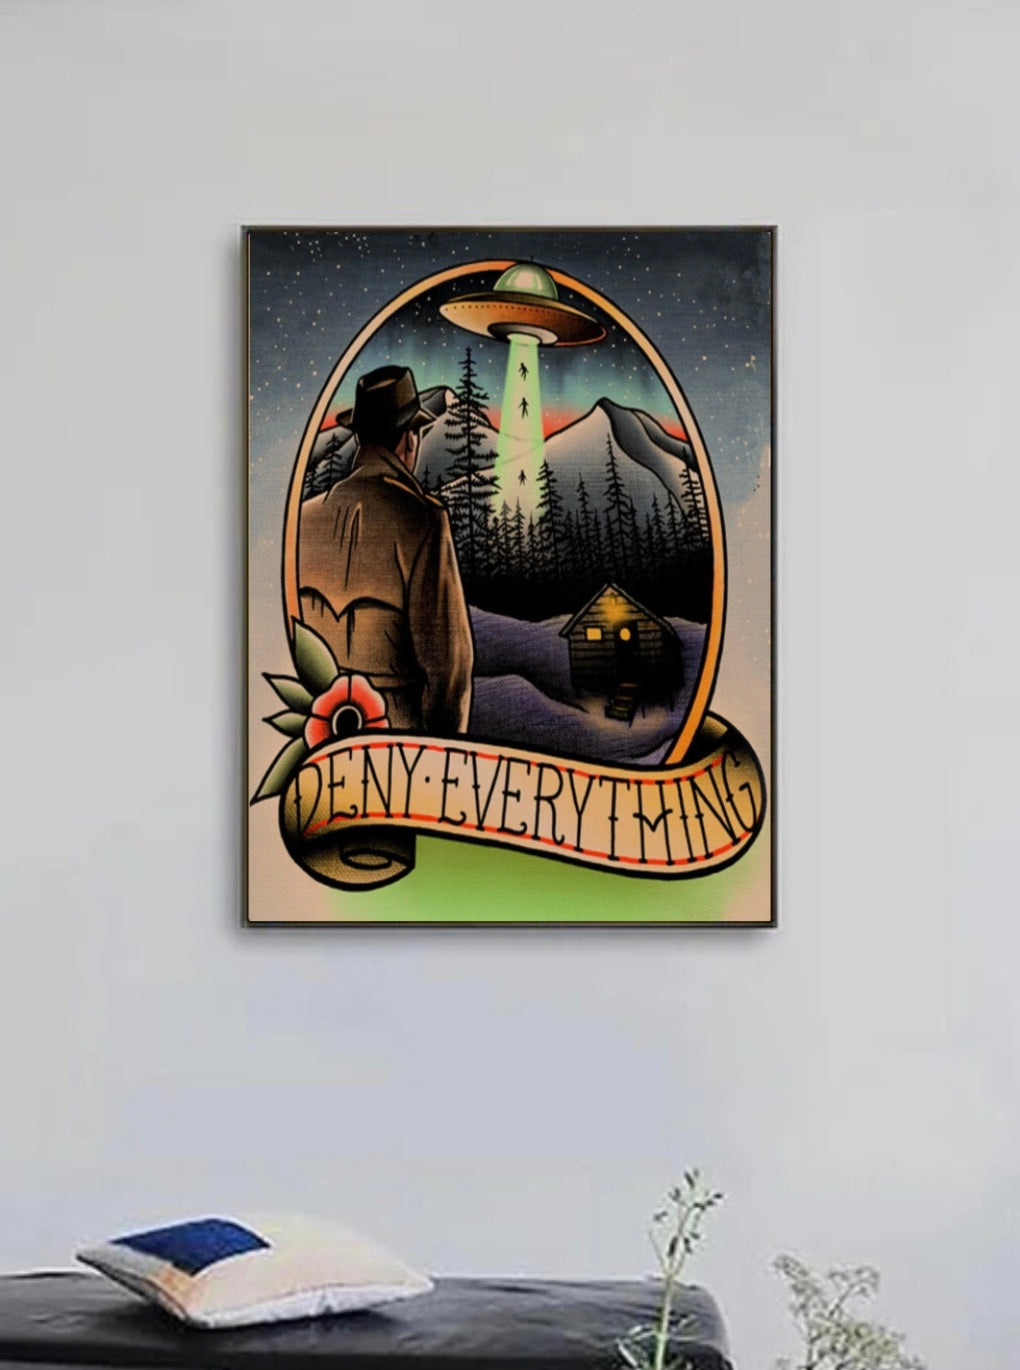 "deni-everything" tattoo poster